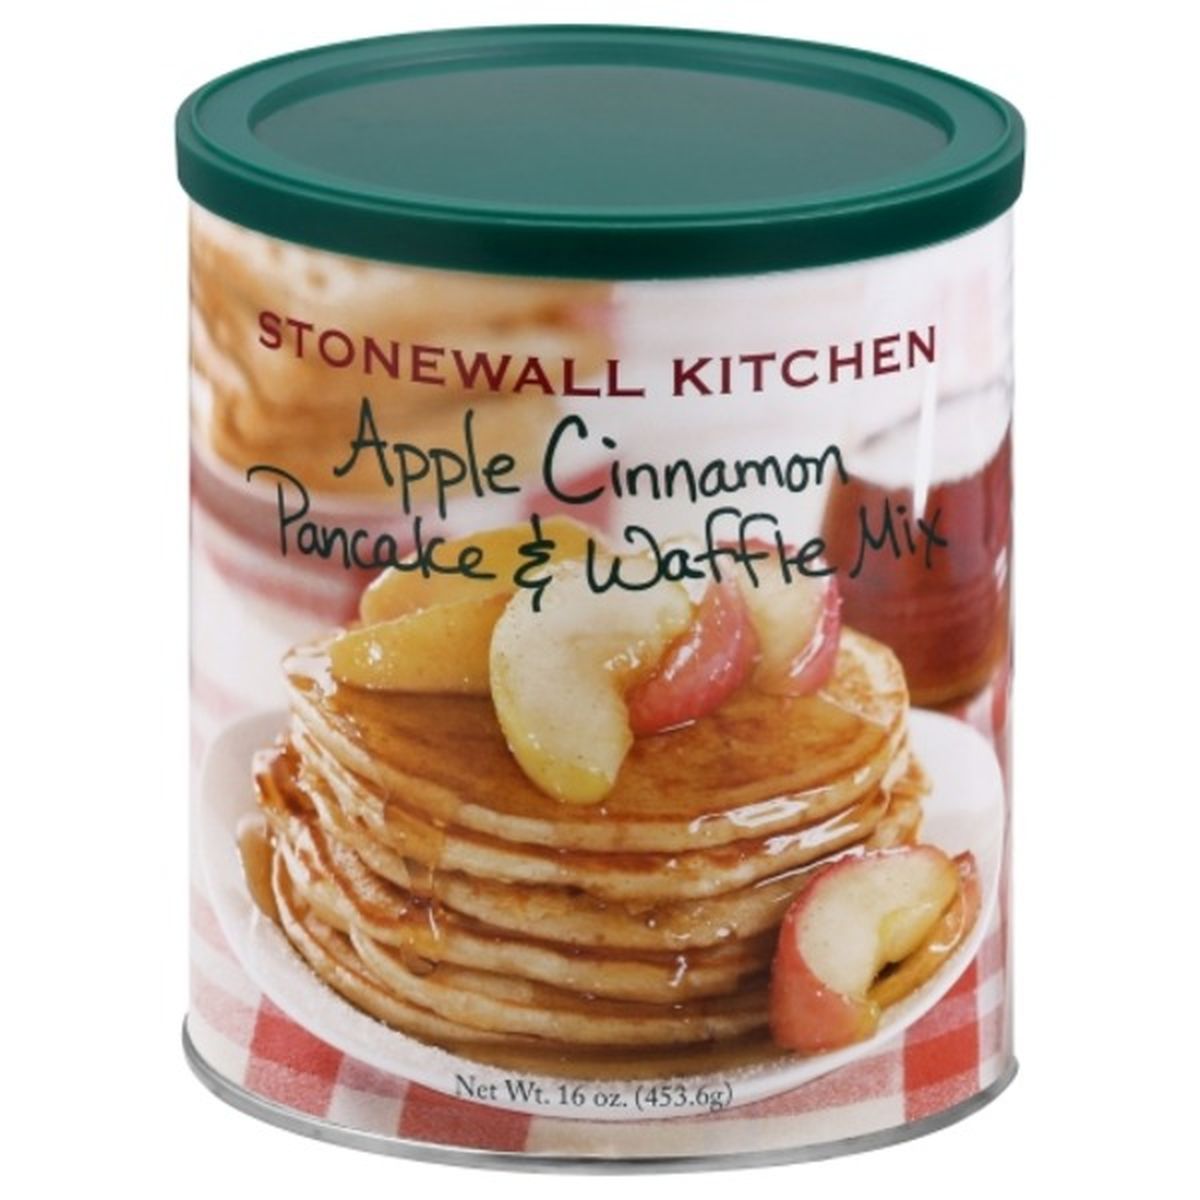 Calories in Stonewall Kitchen Pancake & Waffle Mix, Apple Cinnamon